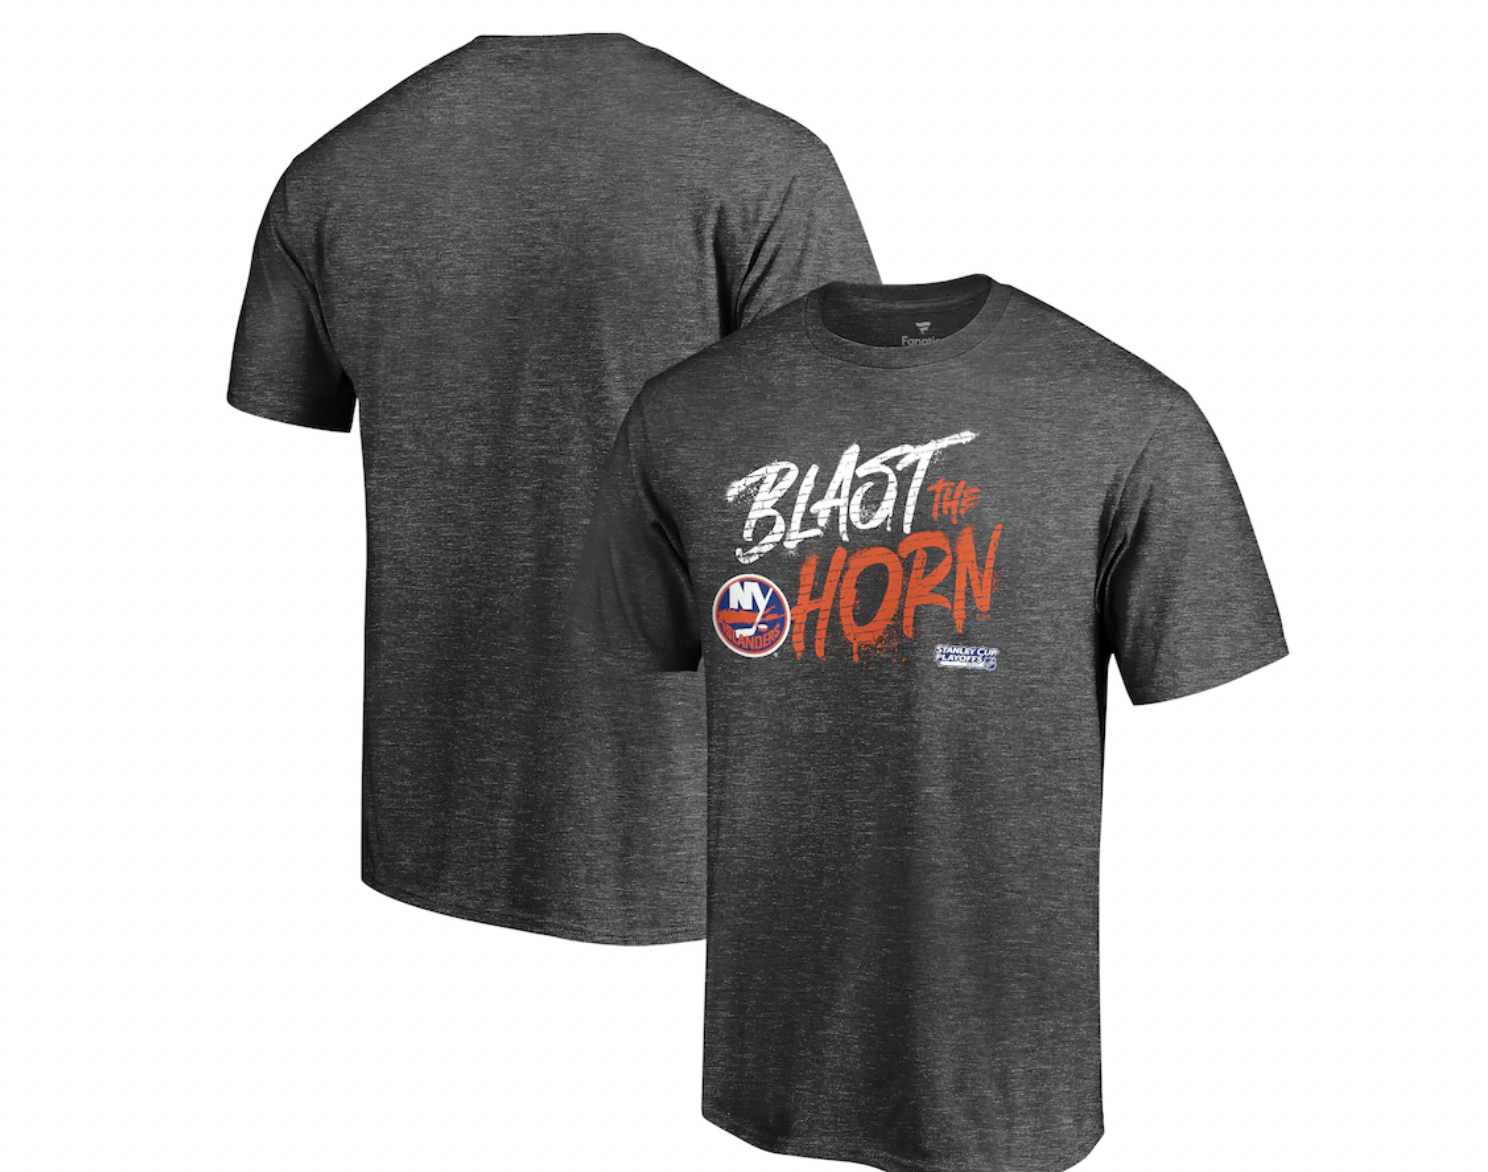 NHL New York Islanders T-Shirts Tops, Clothing